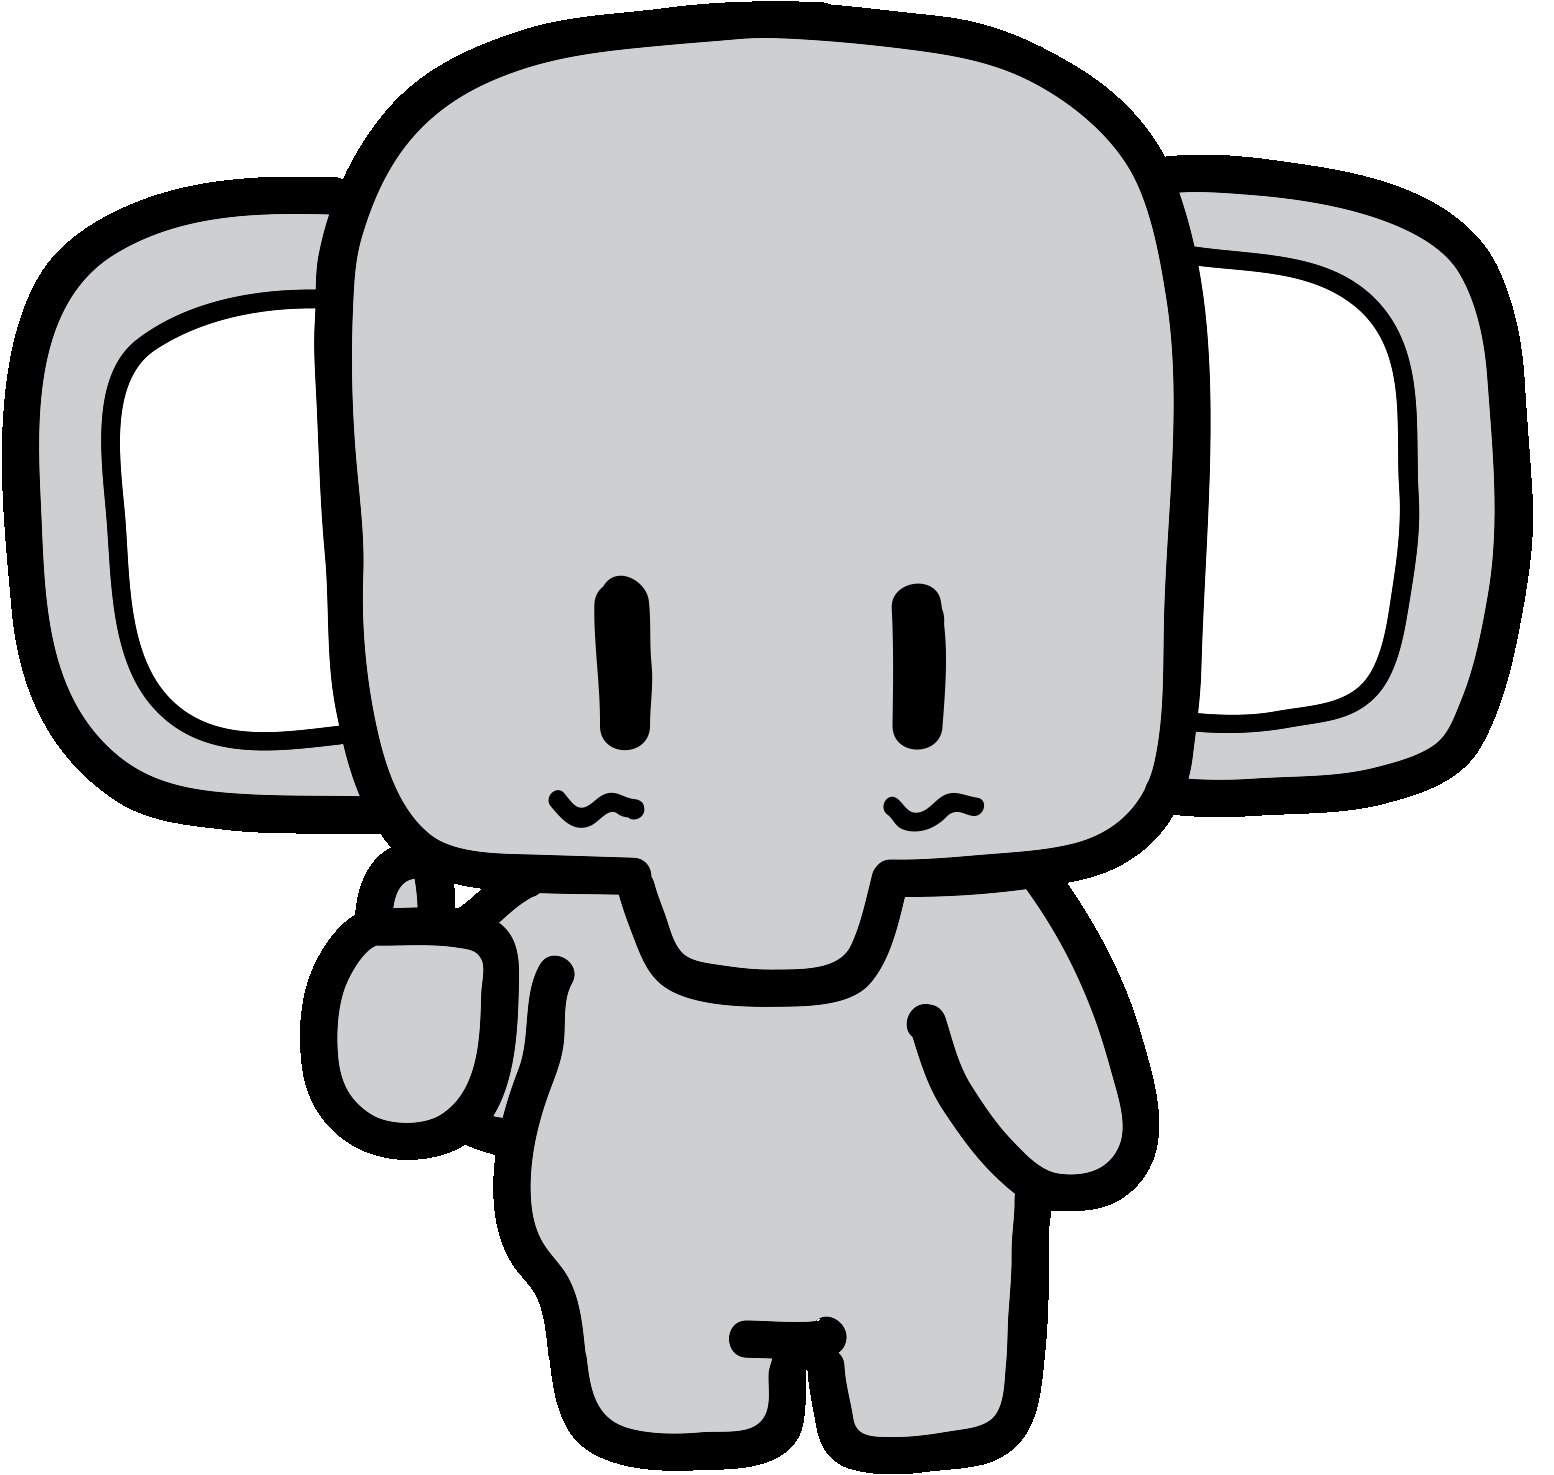 emoji clipart elephant